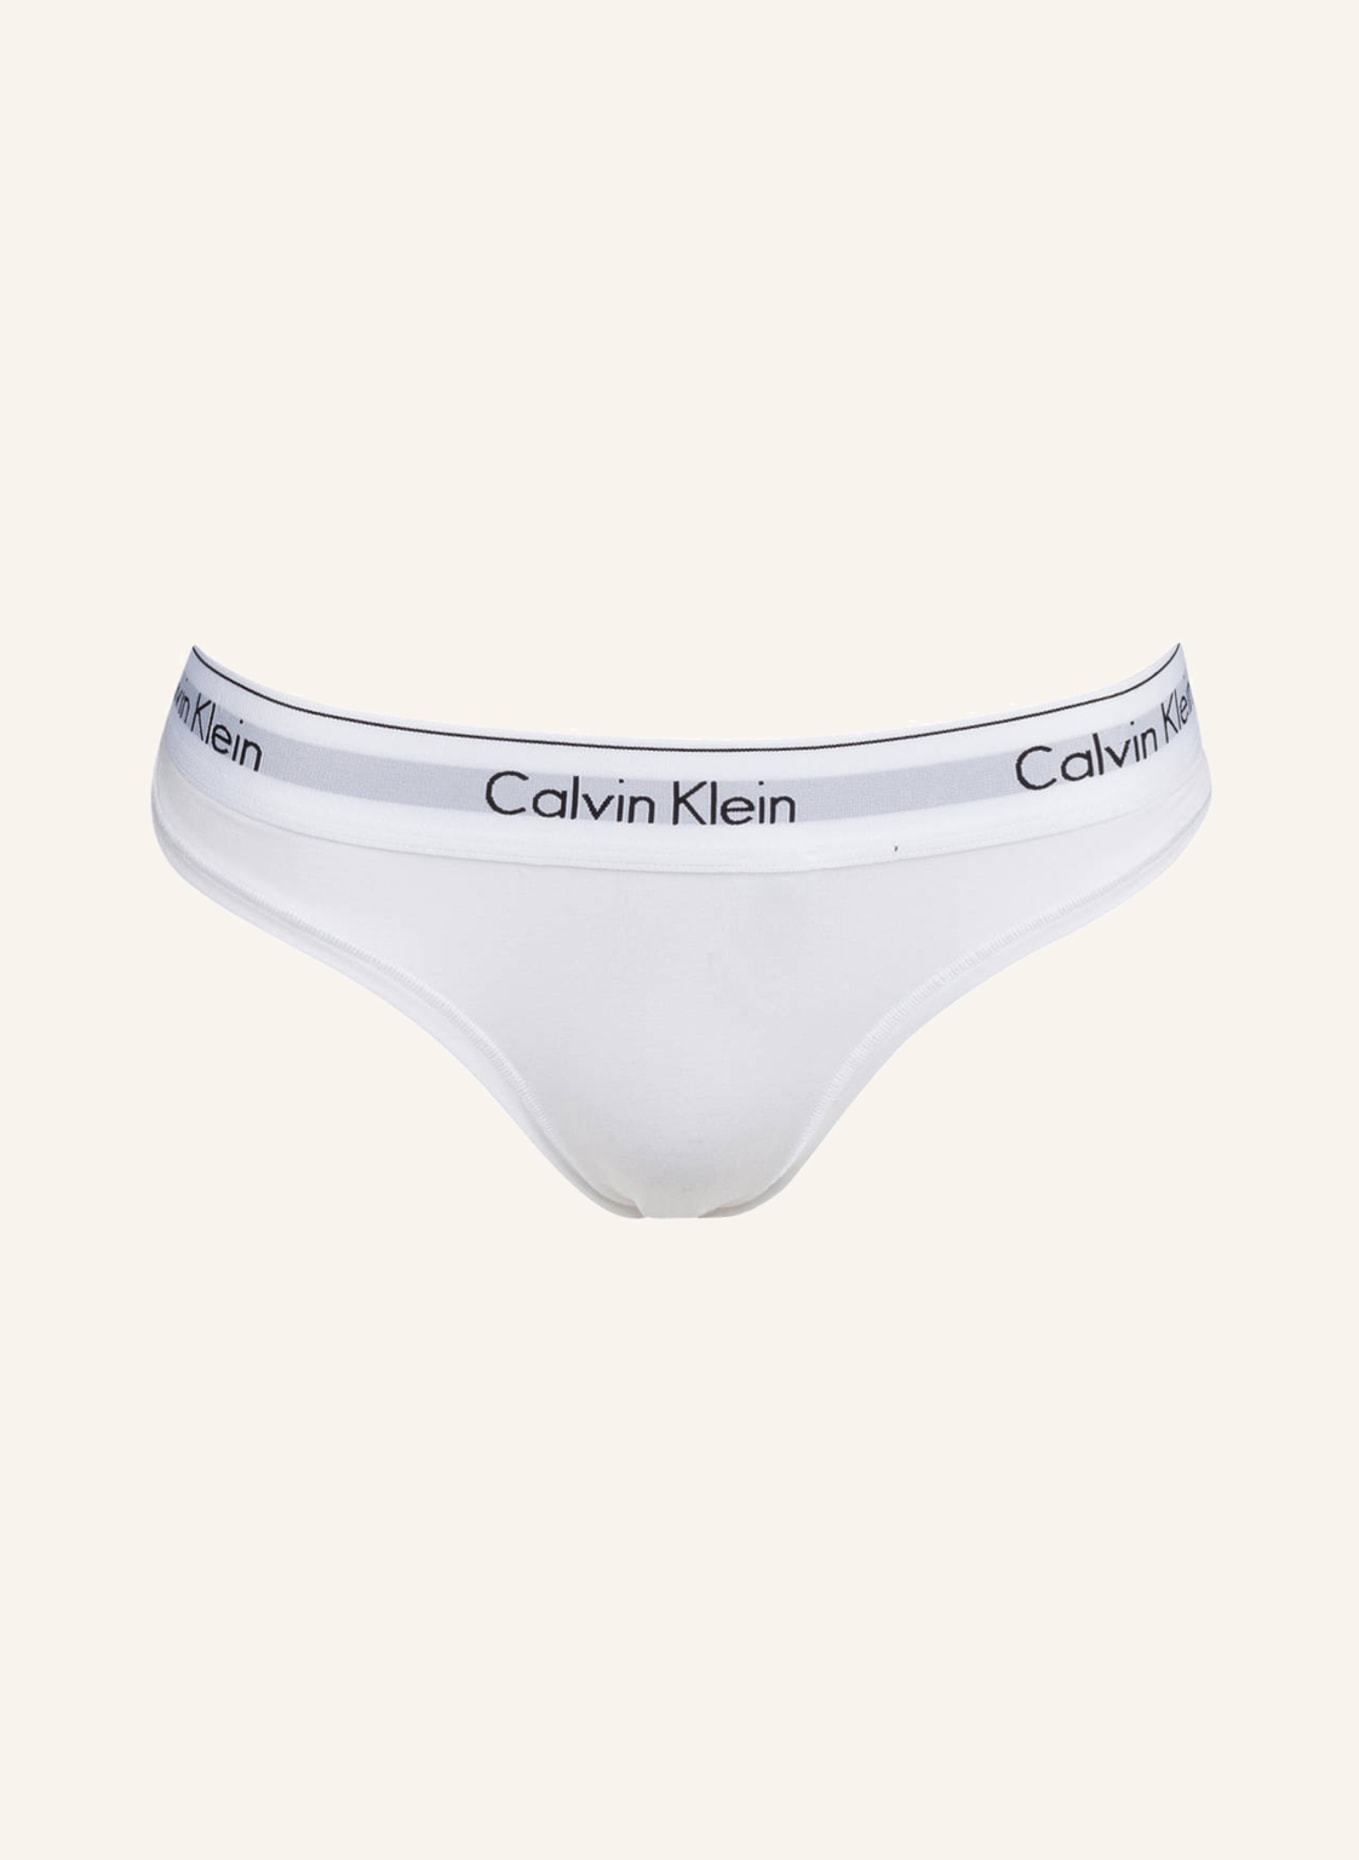 Calvin Klein Thong MODERN COTTON in white